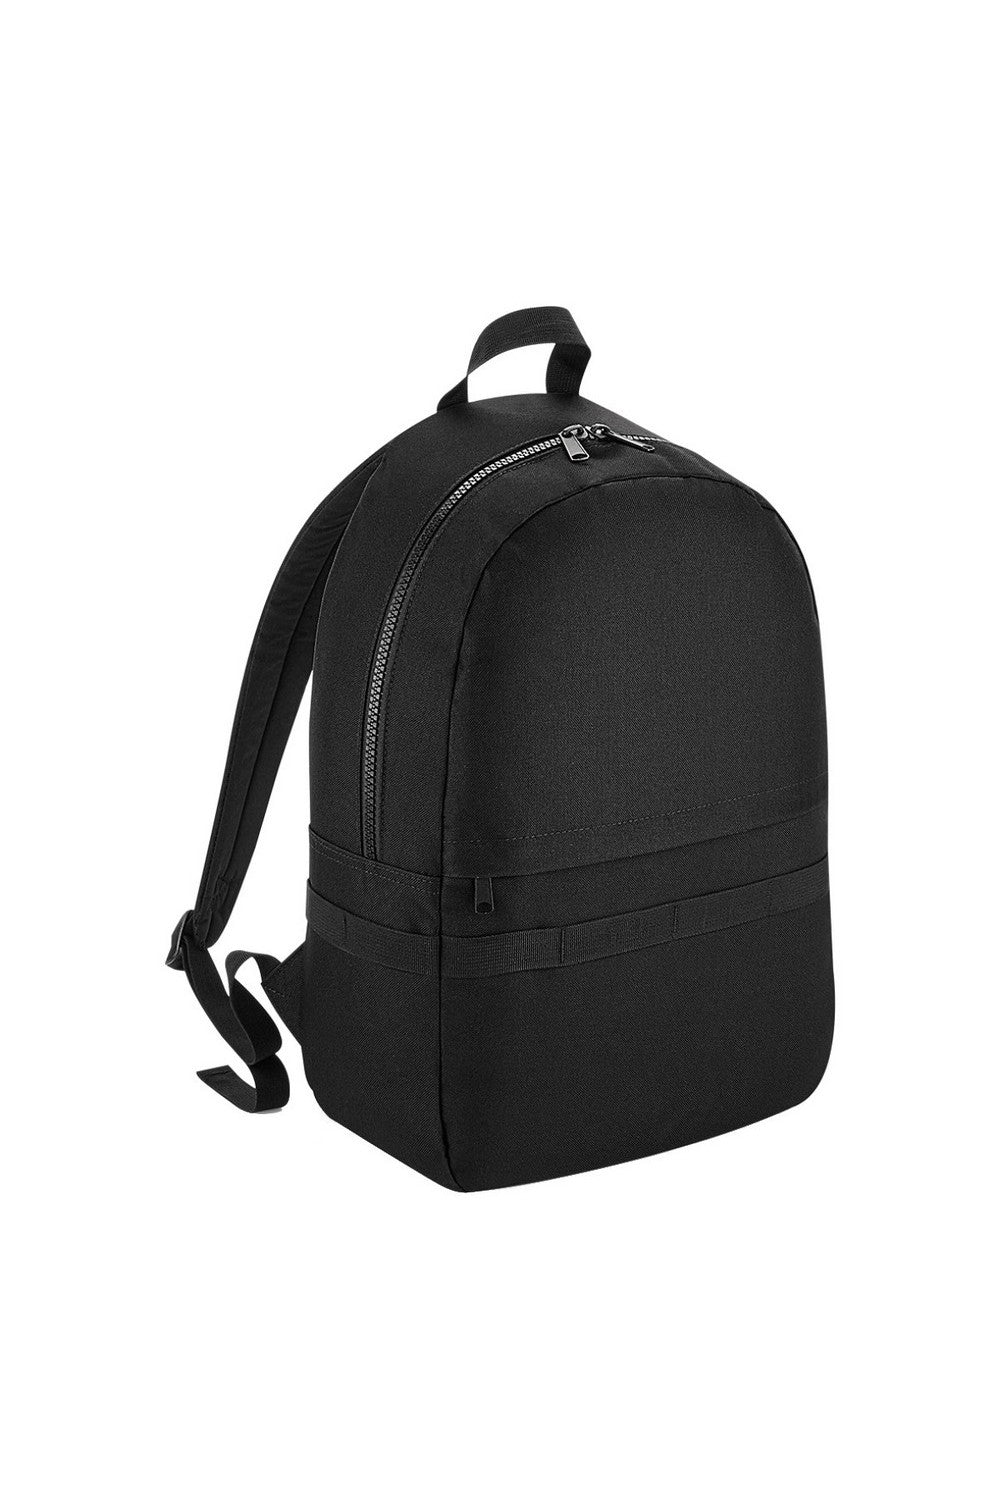 Adults Unisex Modulr 5.2 Gallon Backpack - Black